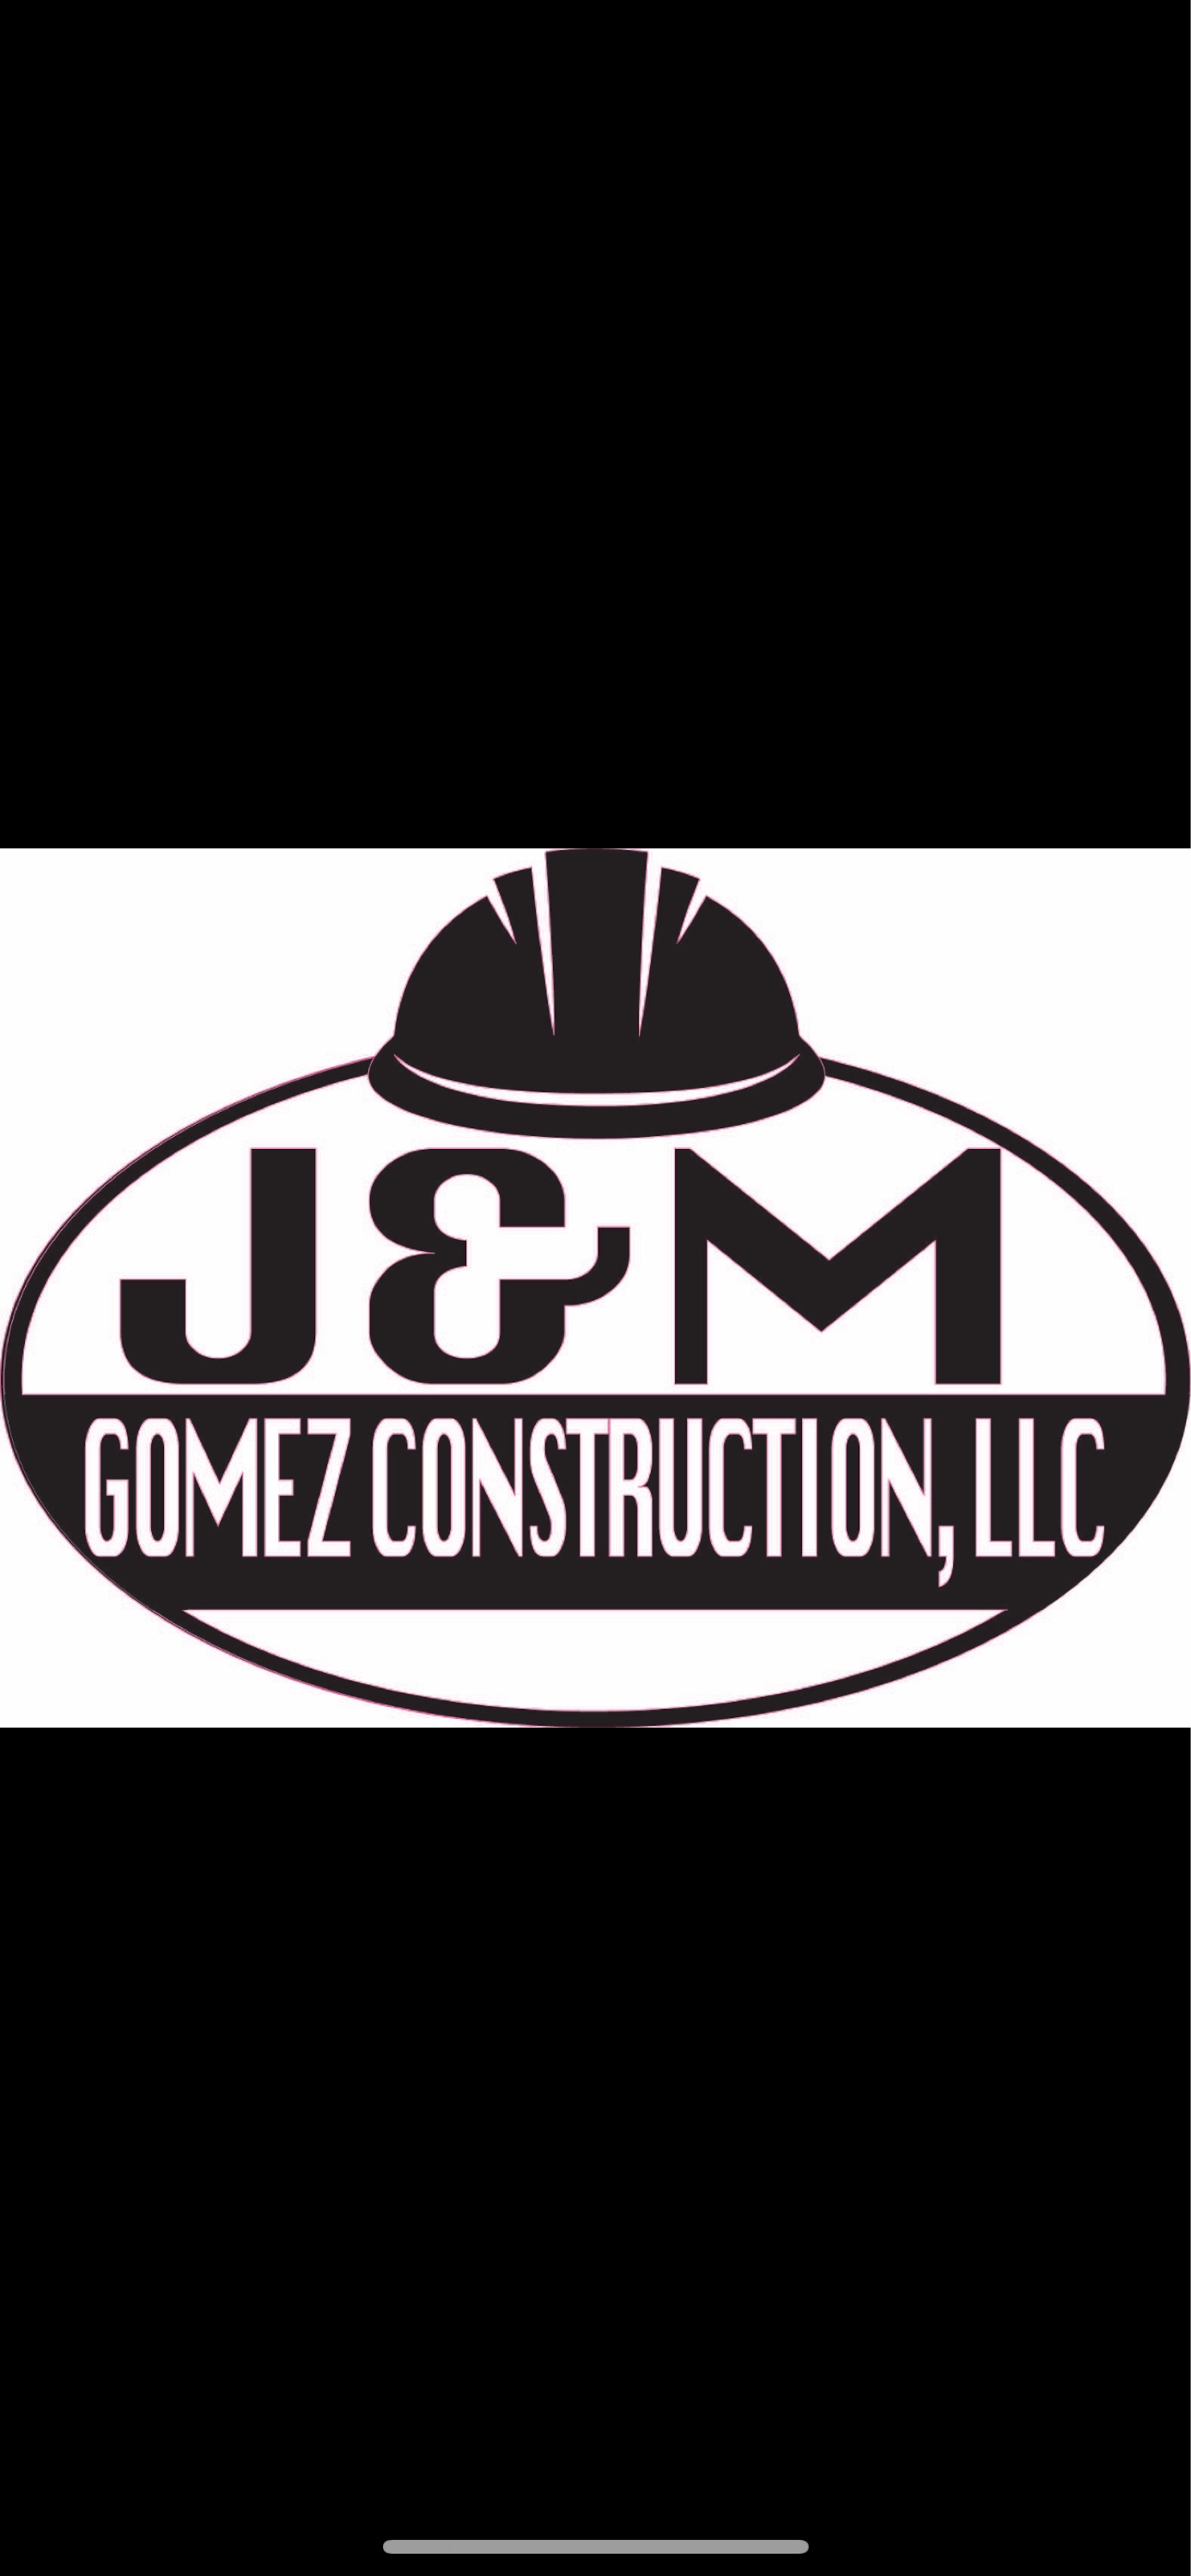 J&M Gomez Construction LLC Logo